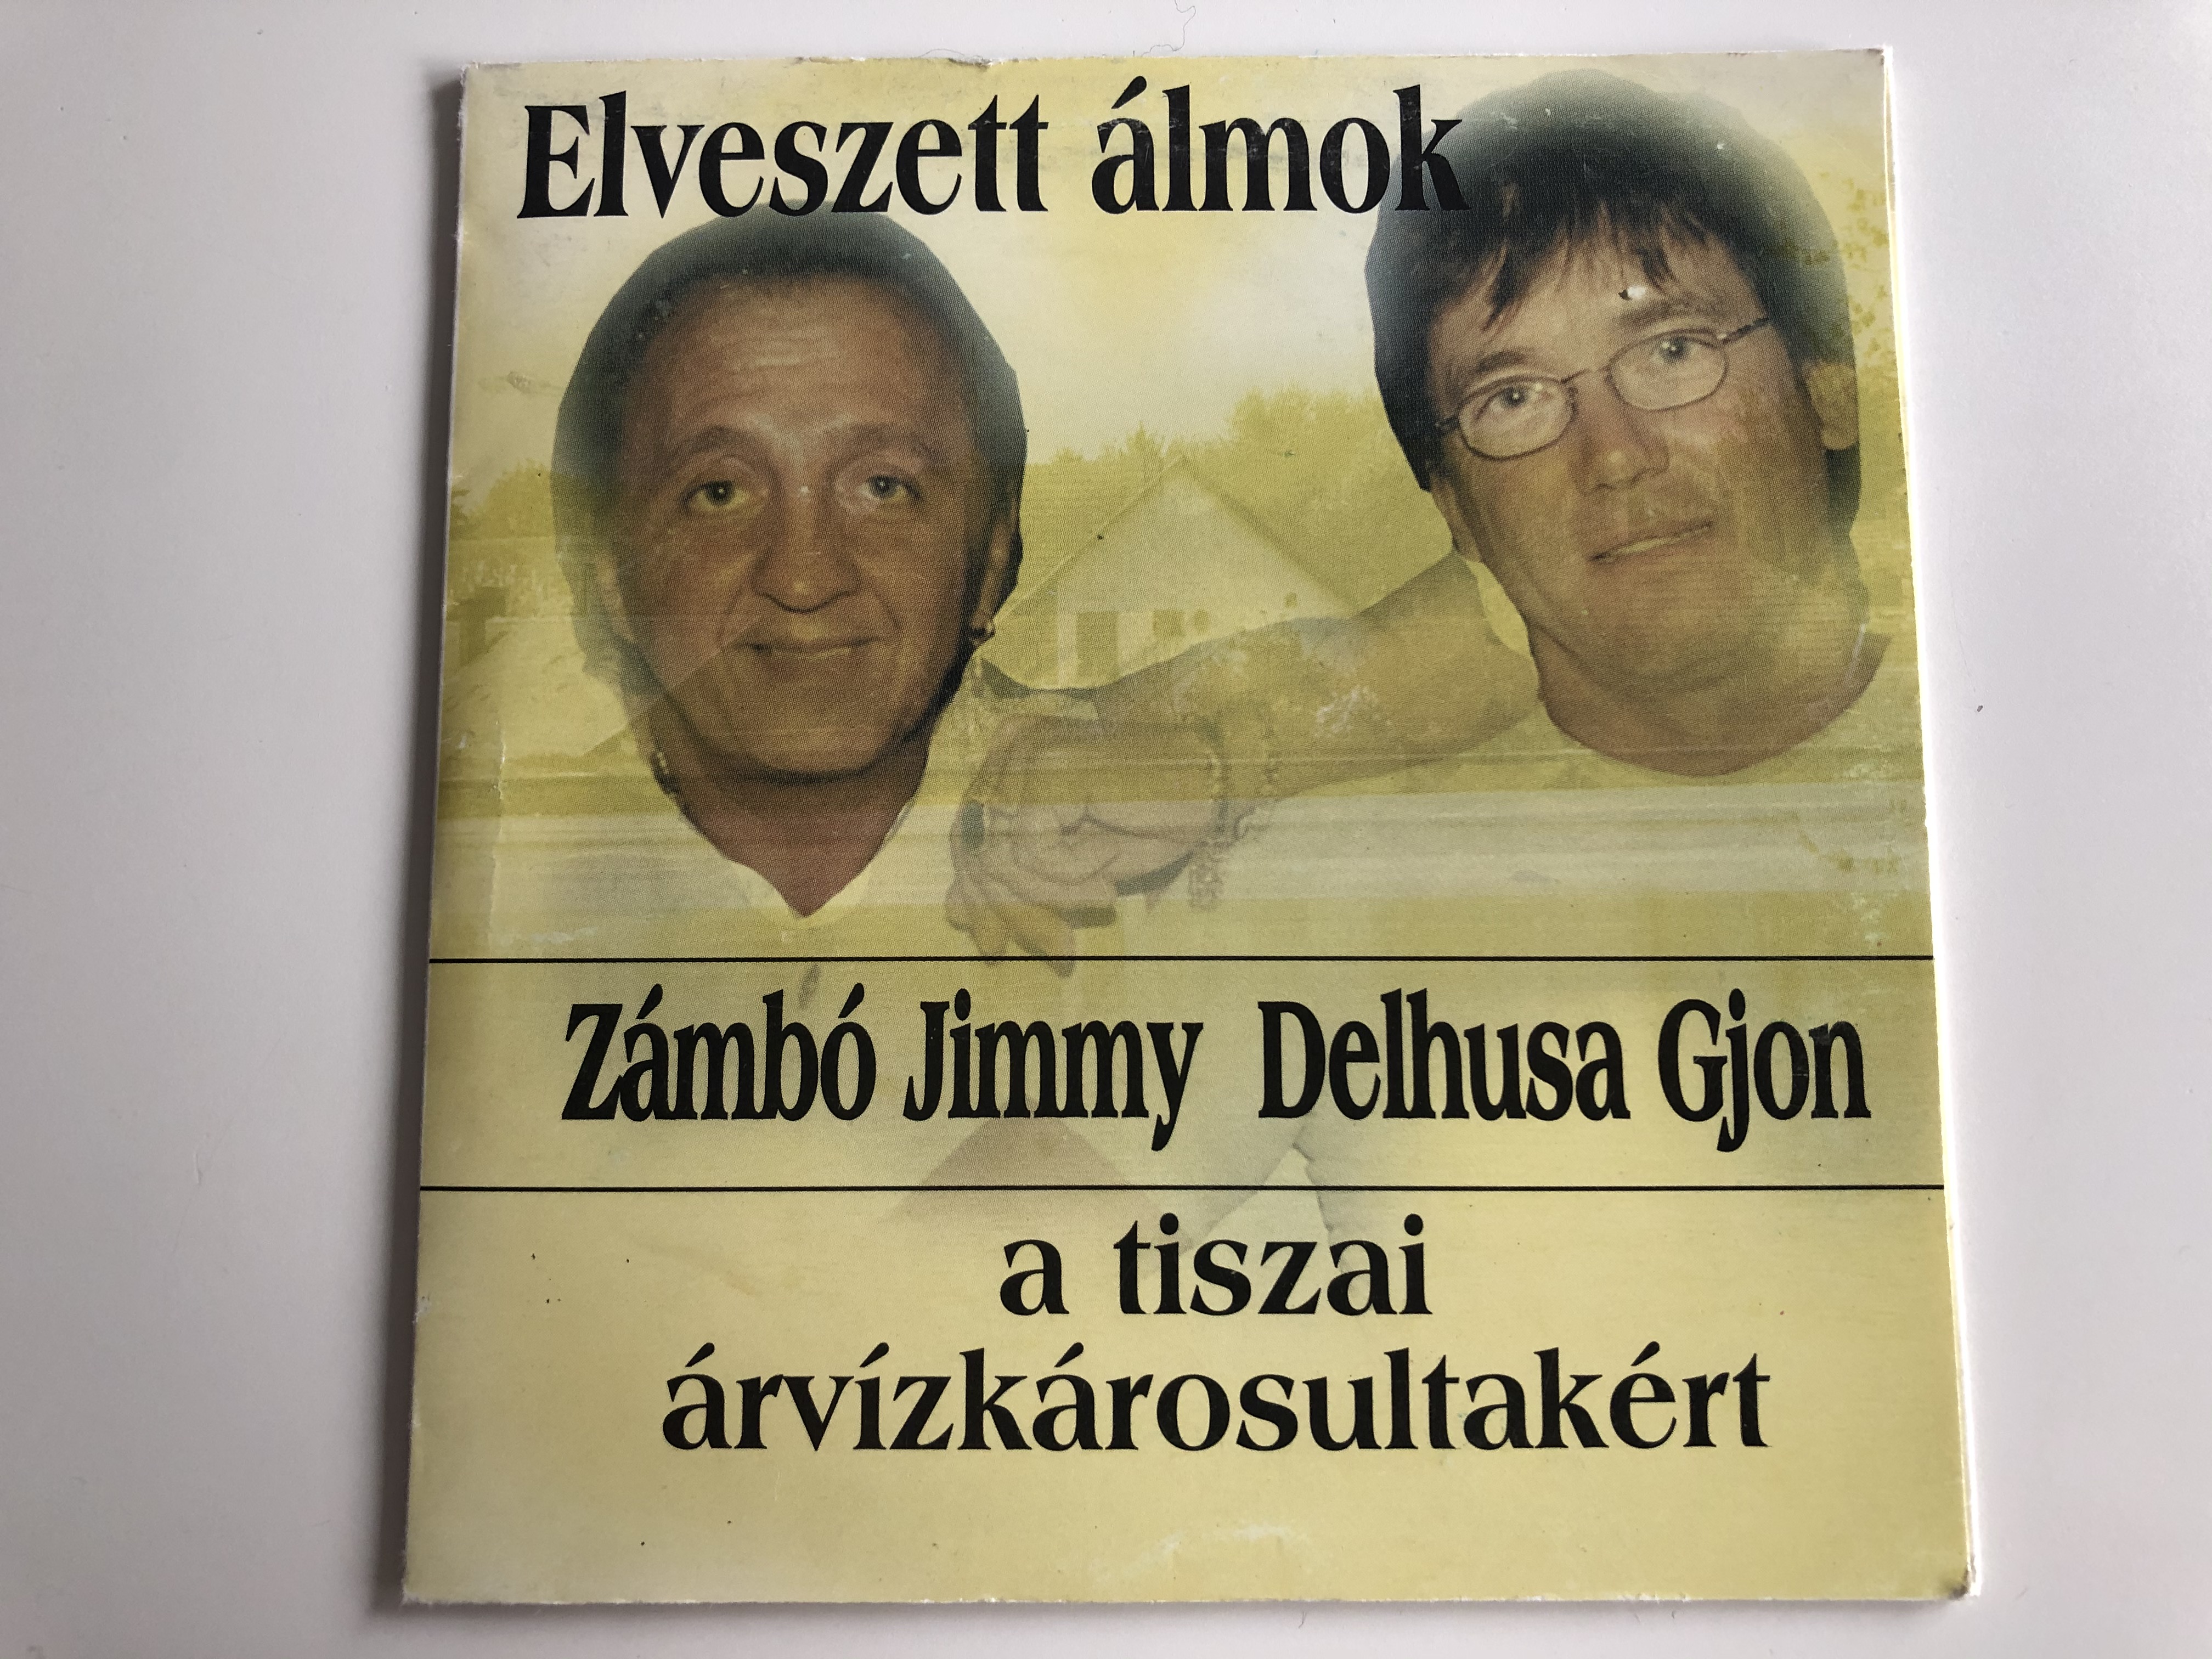 elveszett-lmok-z-mb-jimmy-delhusa-gjon-a-tiszai-rv-zk-rosultak-rt-gong-express-kft.-audio-cd-ta-2000-1-.jpg